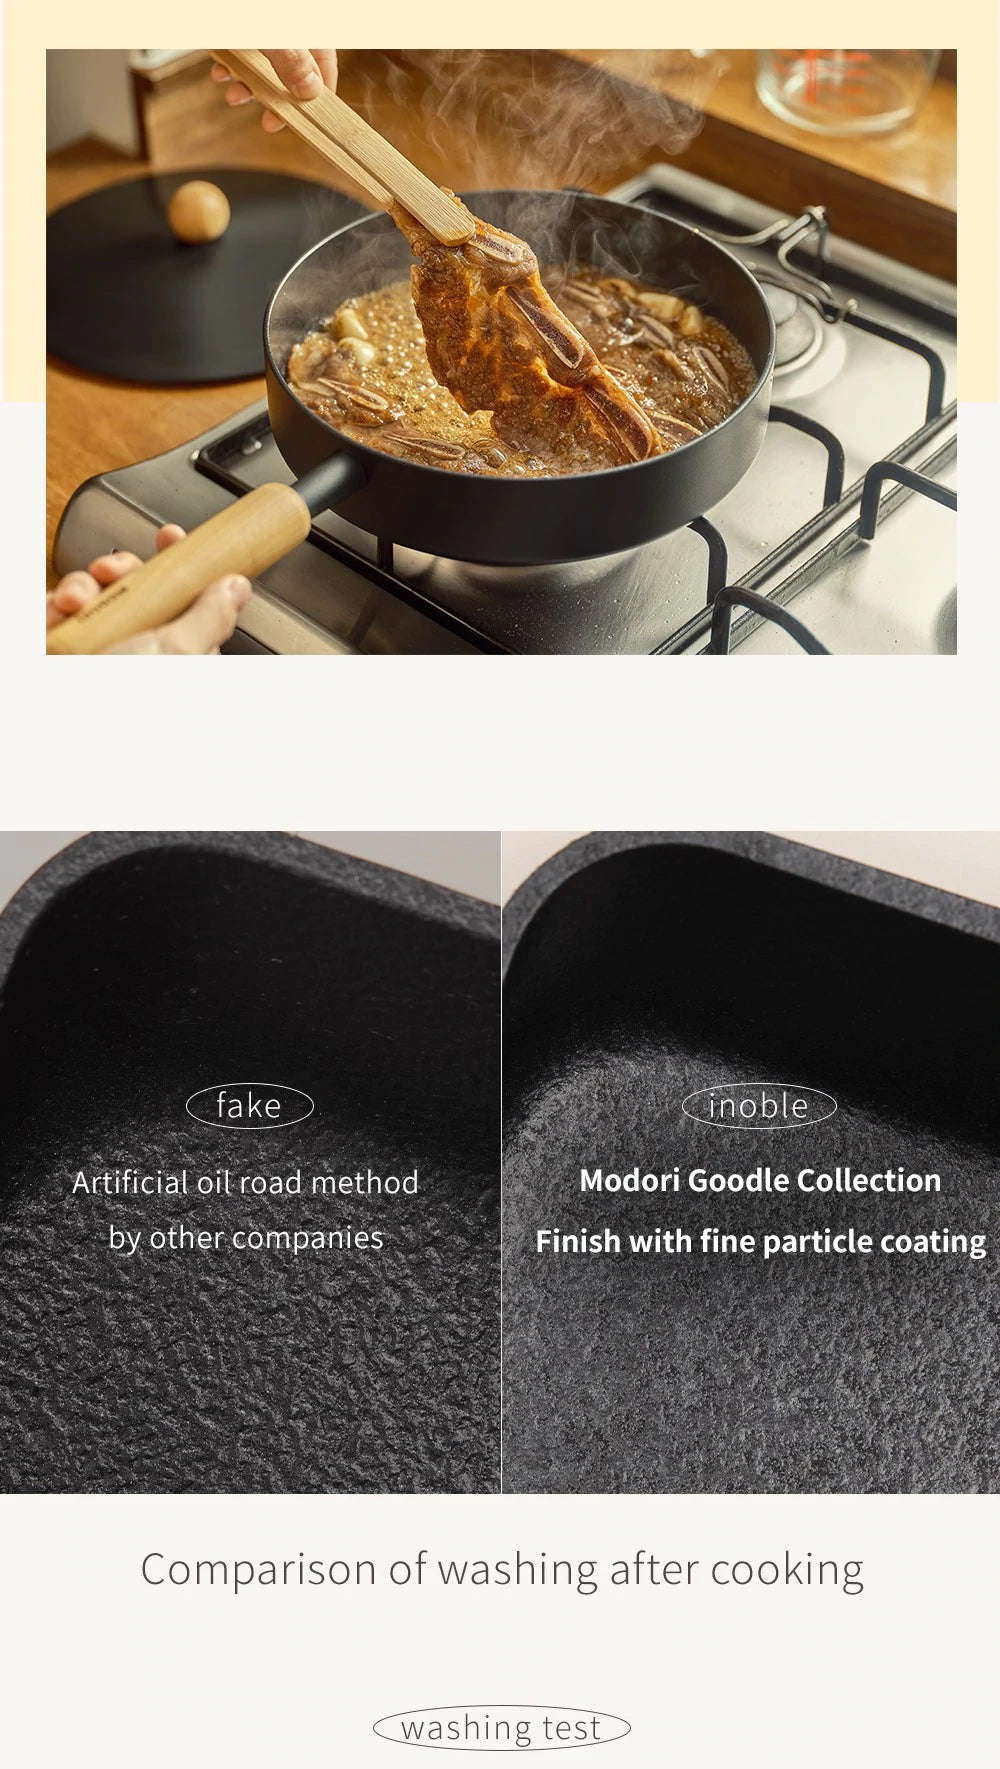 [Modori] Goodle Korean Cookware (4 Types)